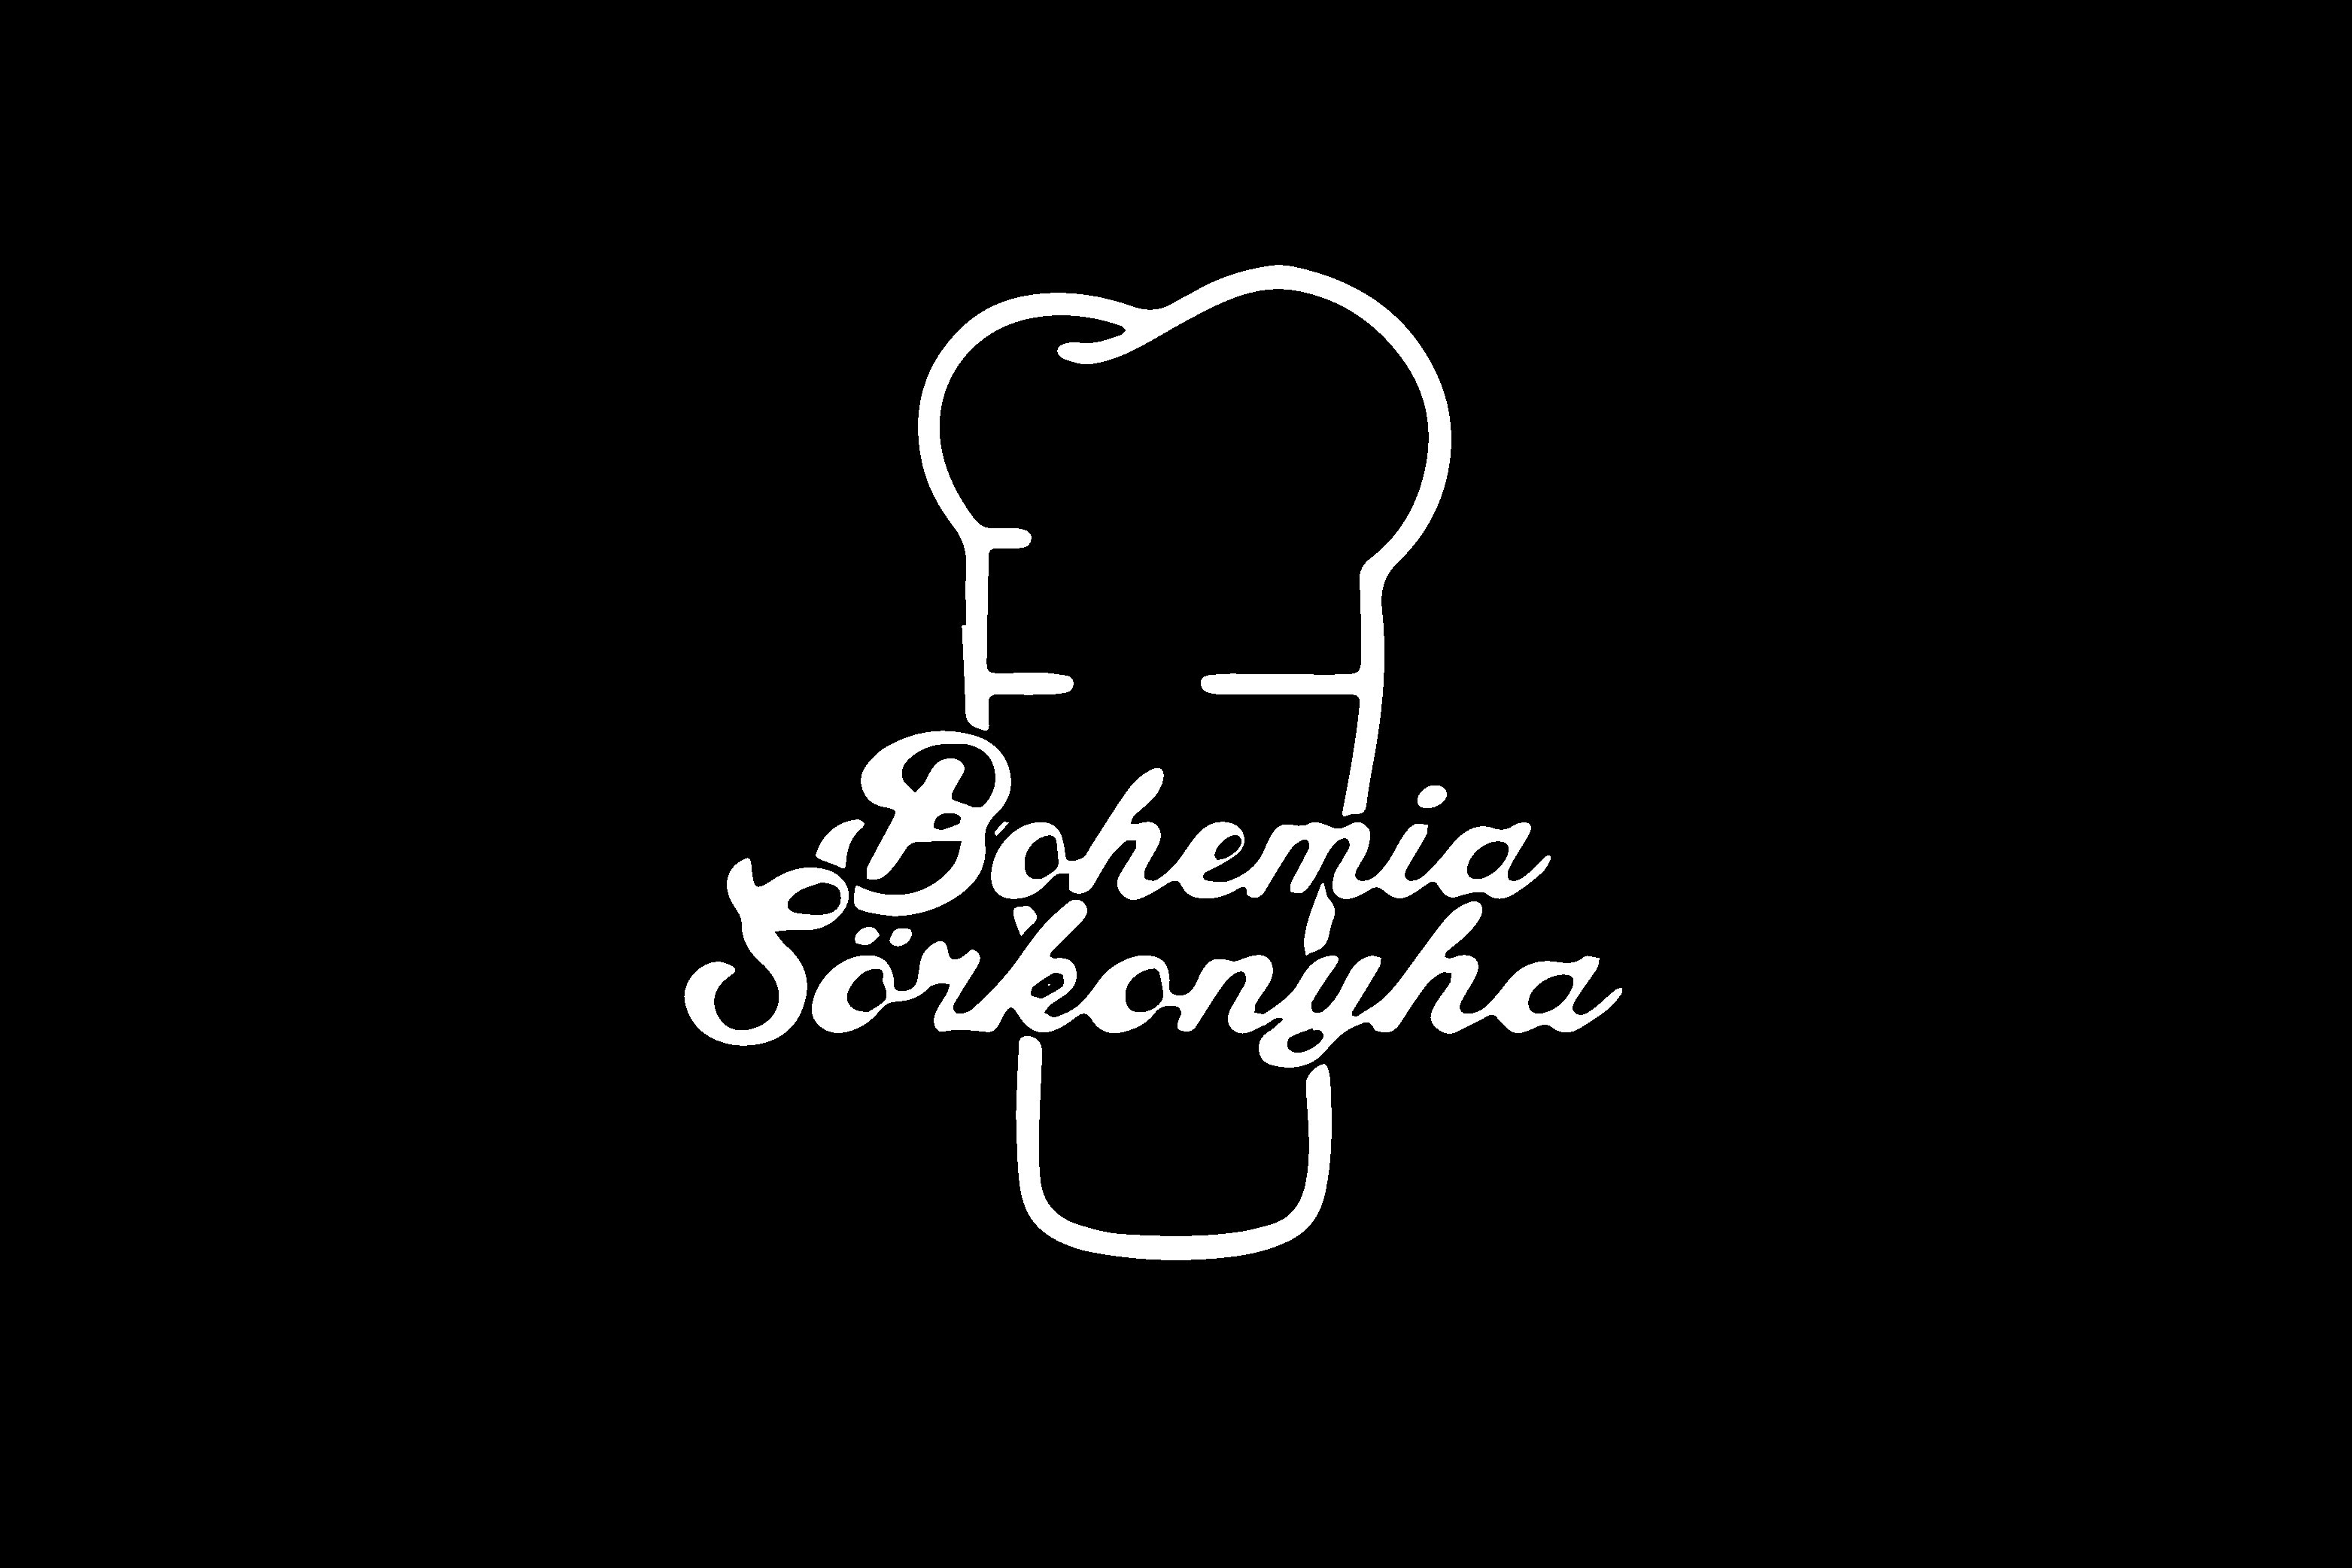 Bohemia Sörkonyha